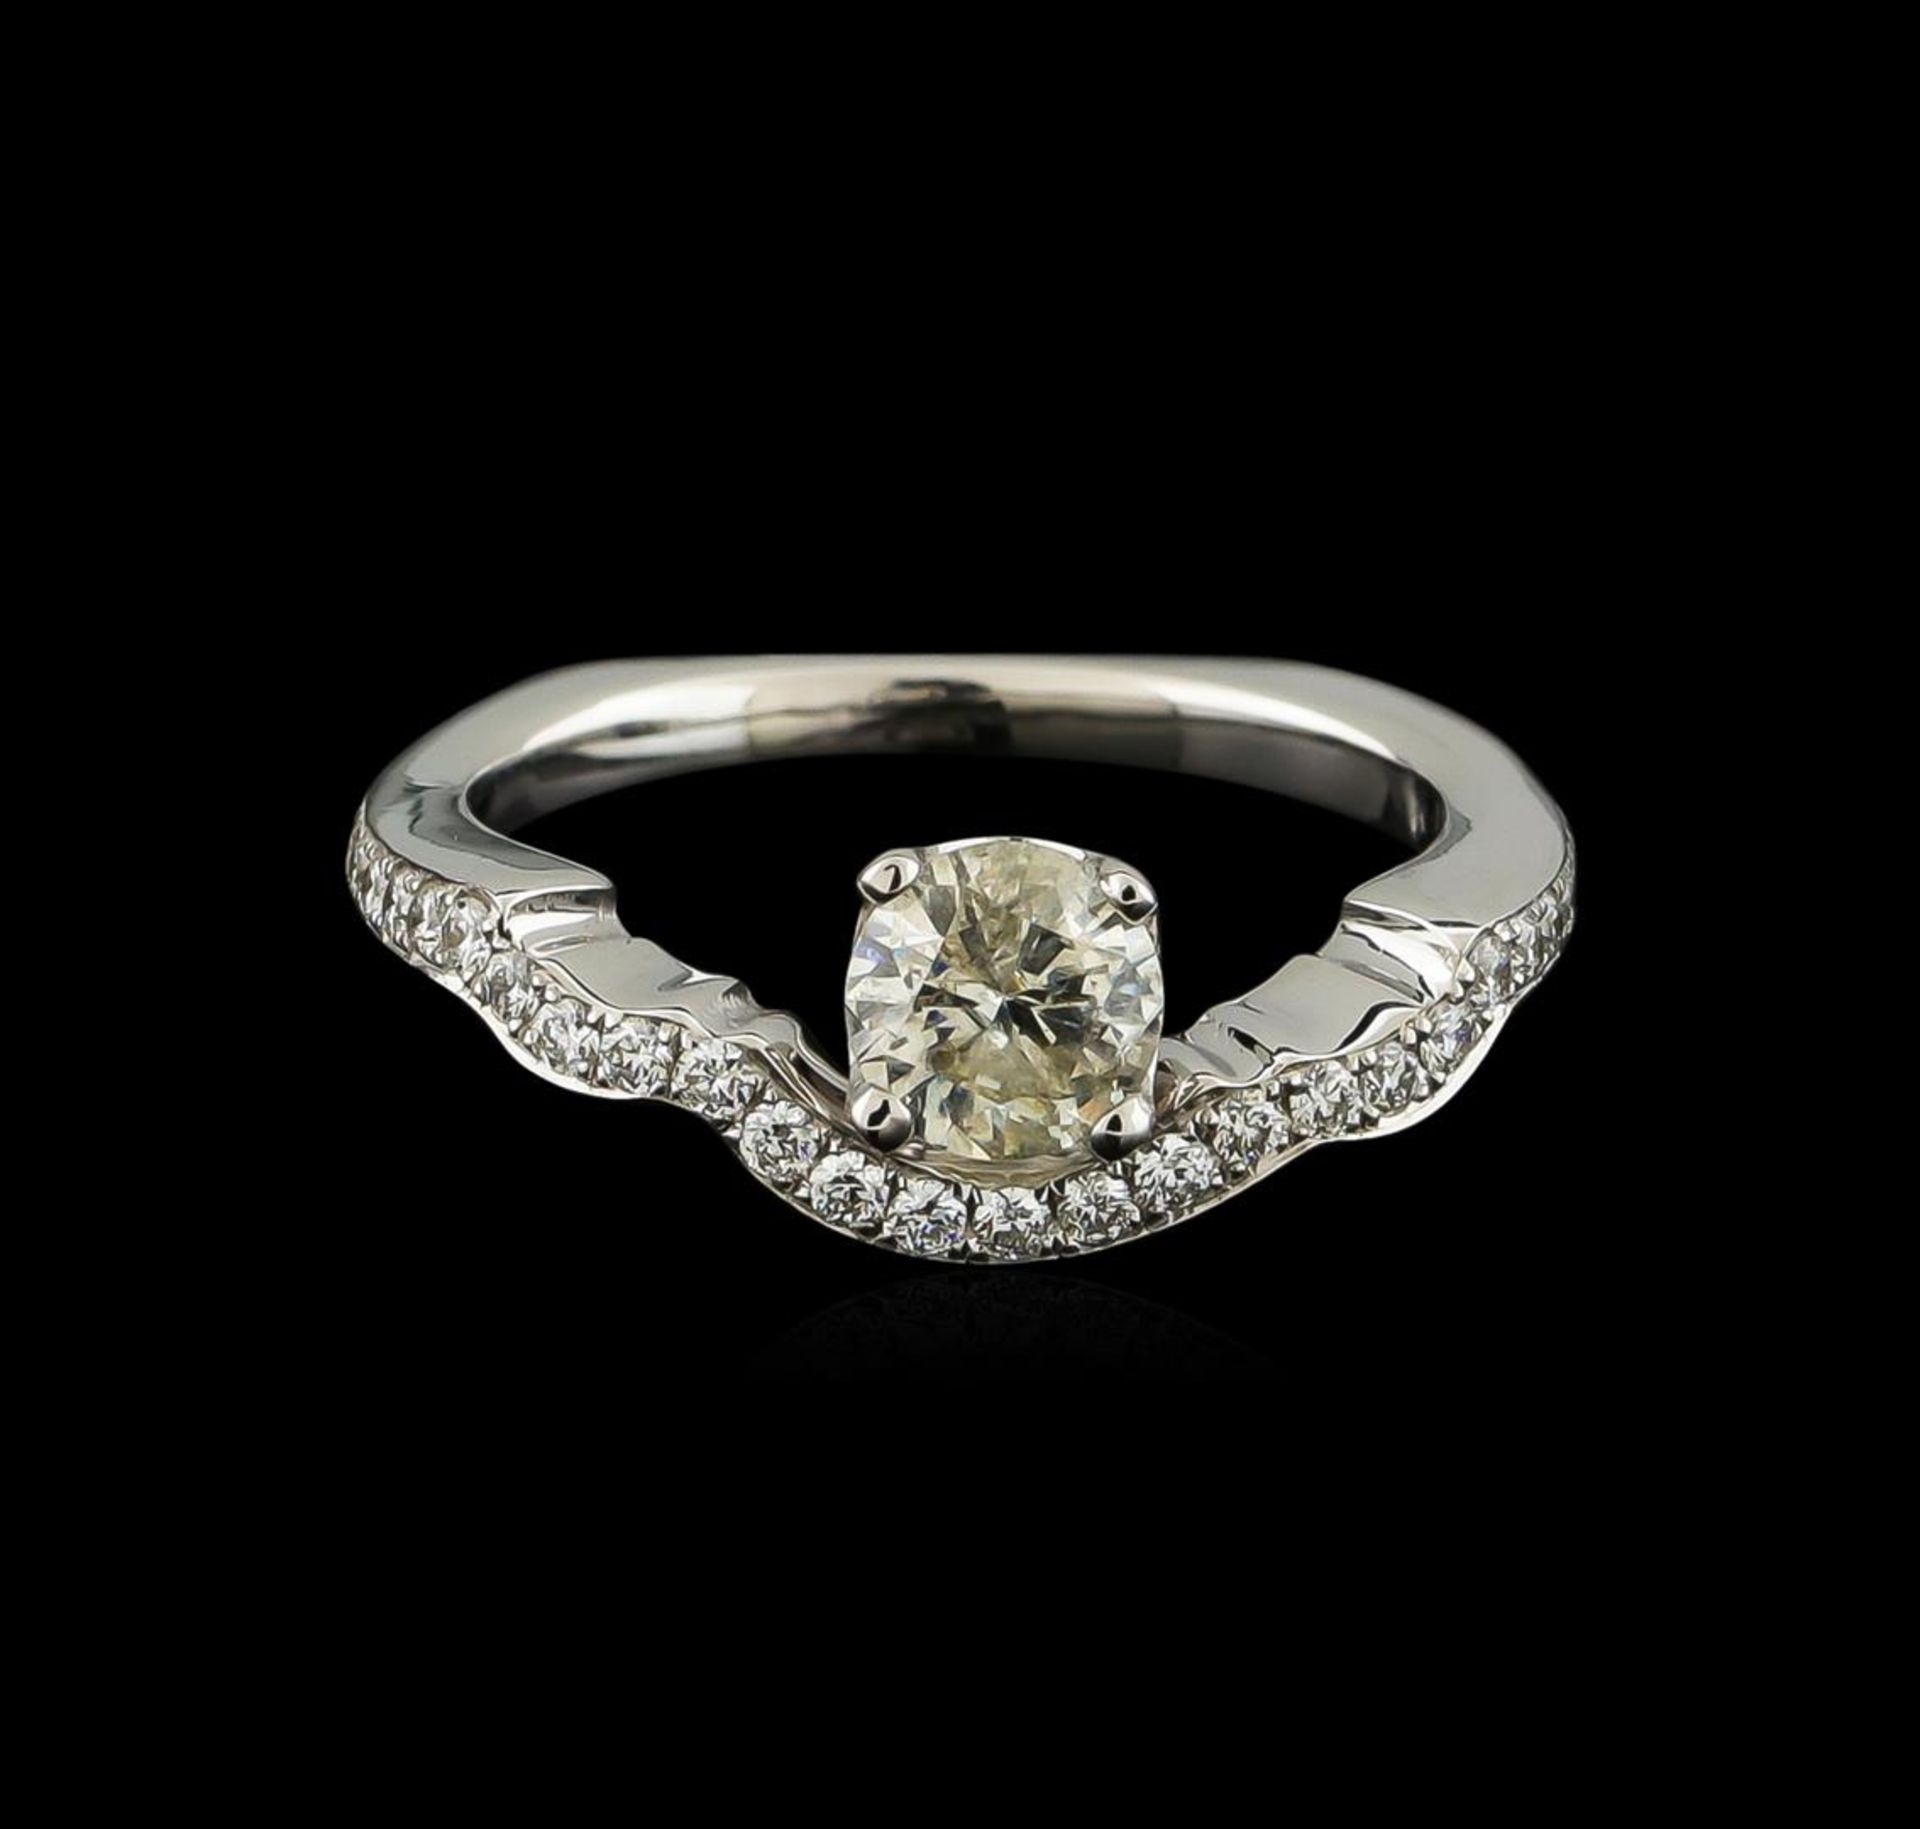 0.70 ctw Diamond Ring - 14KT White Gold - Image 2 of 4